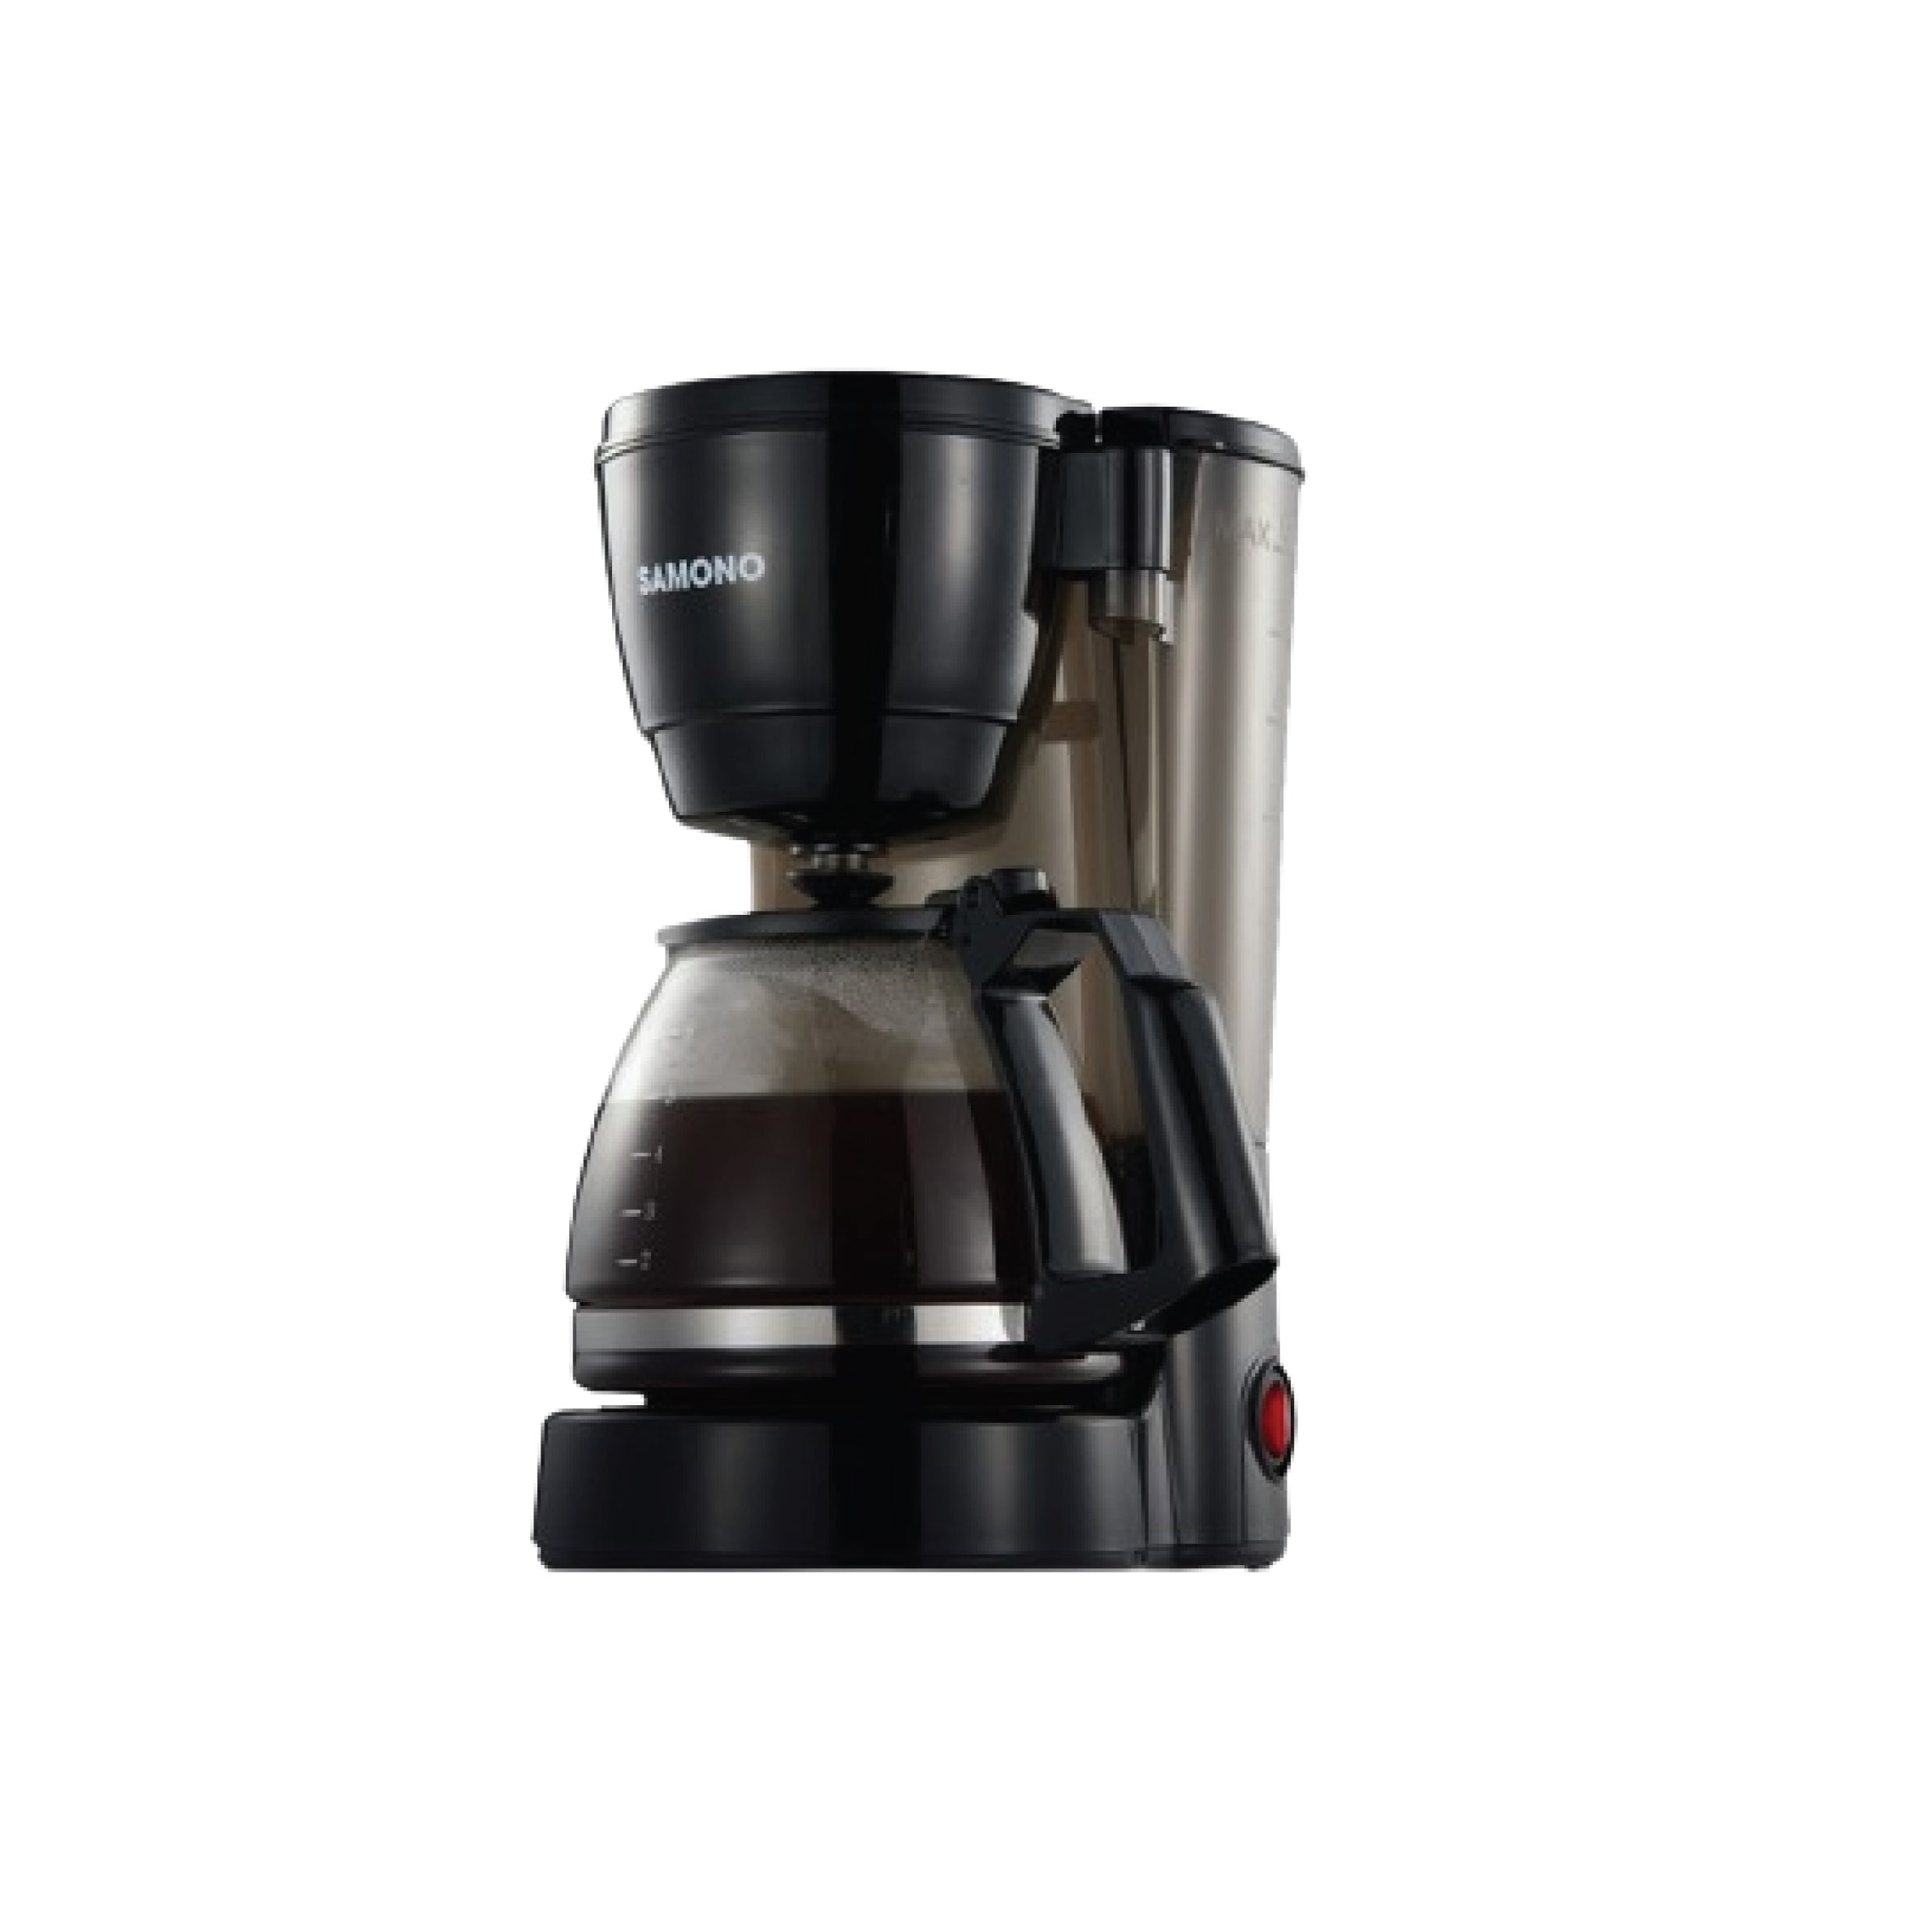 SAMONO SW-CMB06B home coffee maker Black